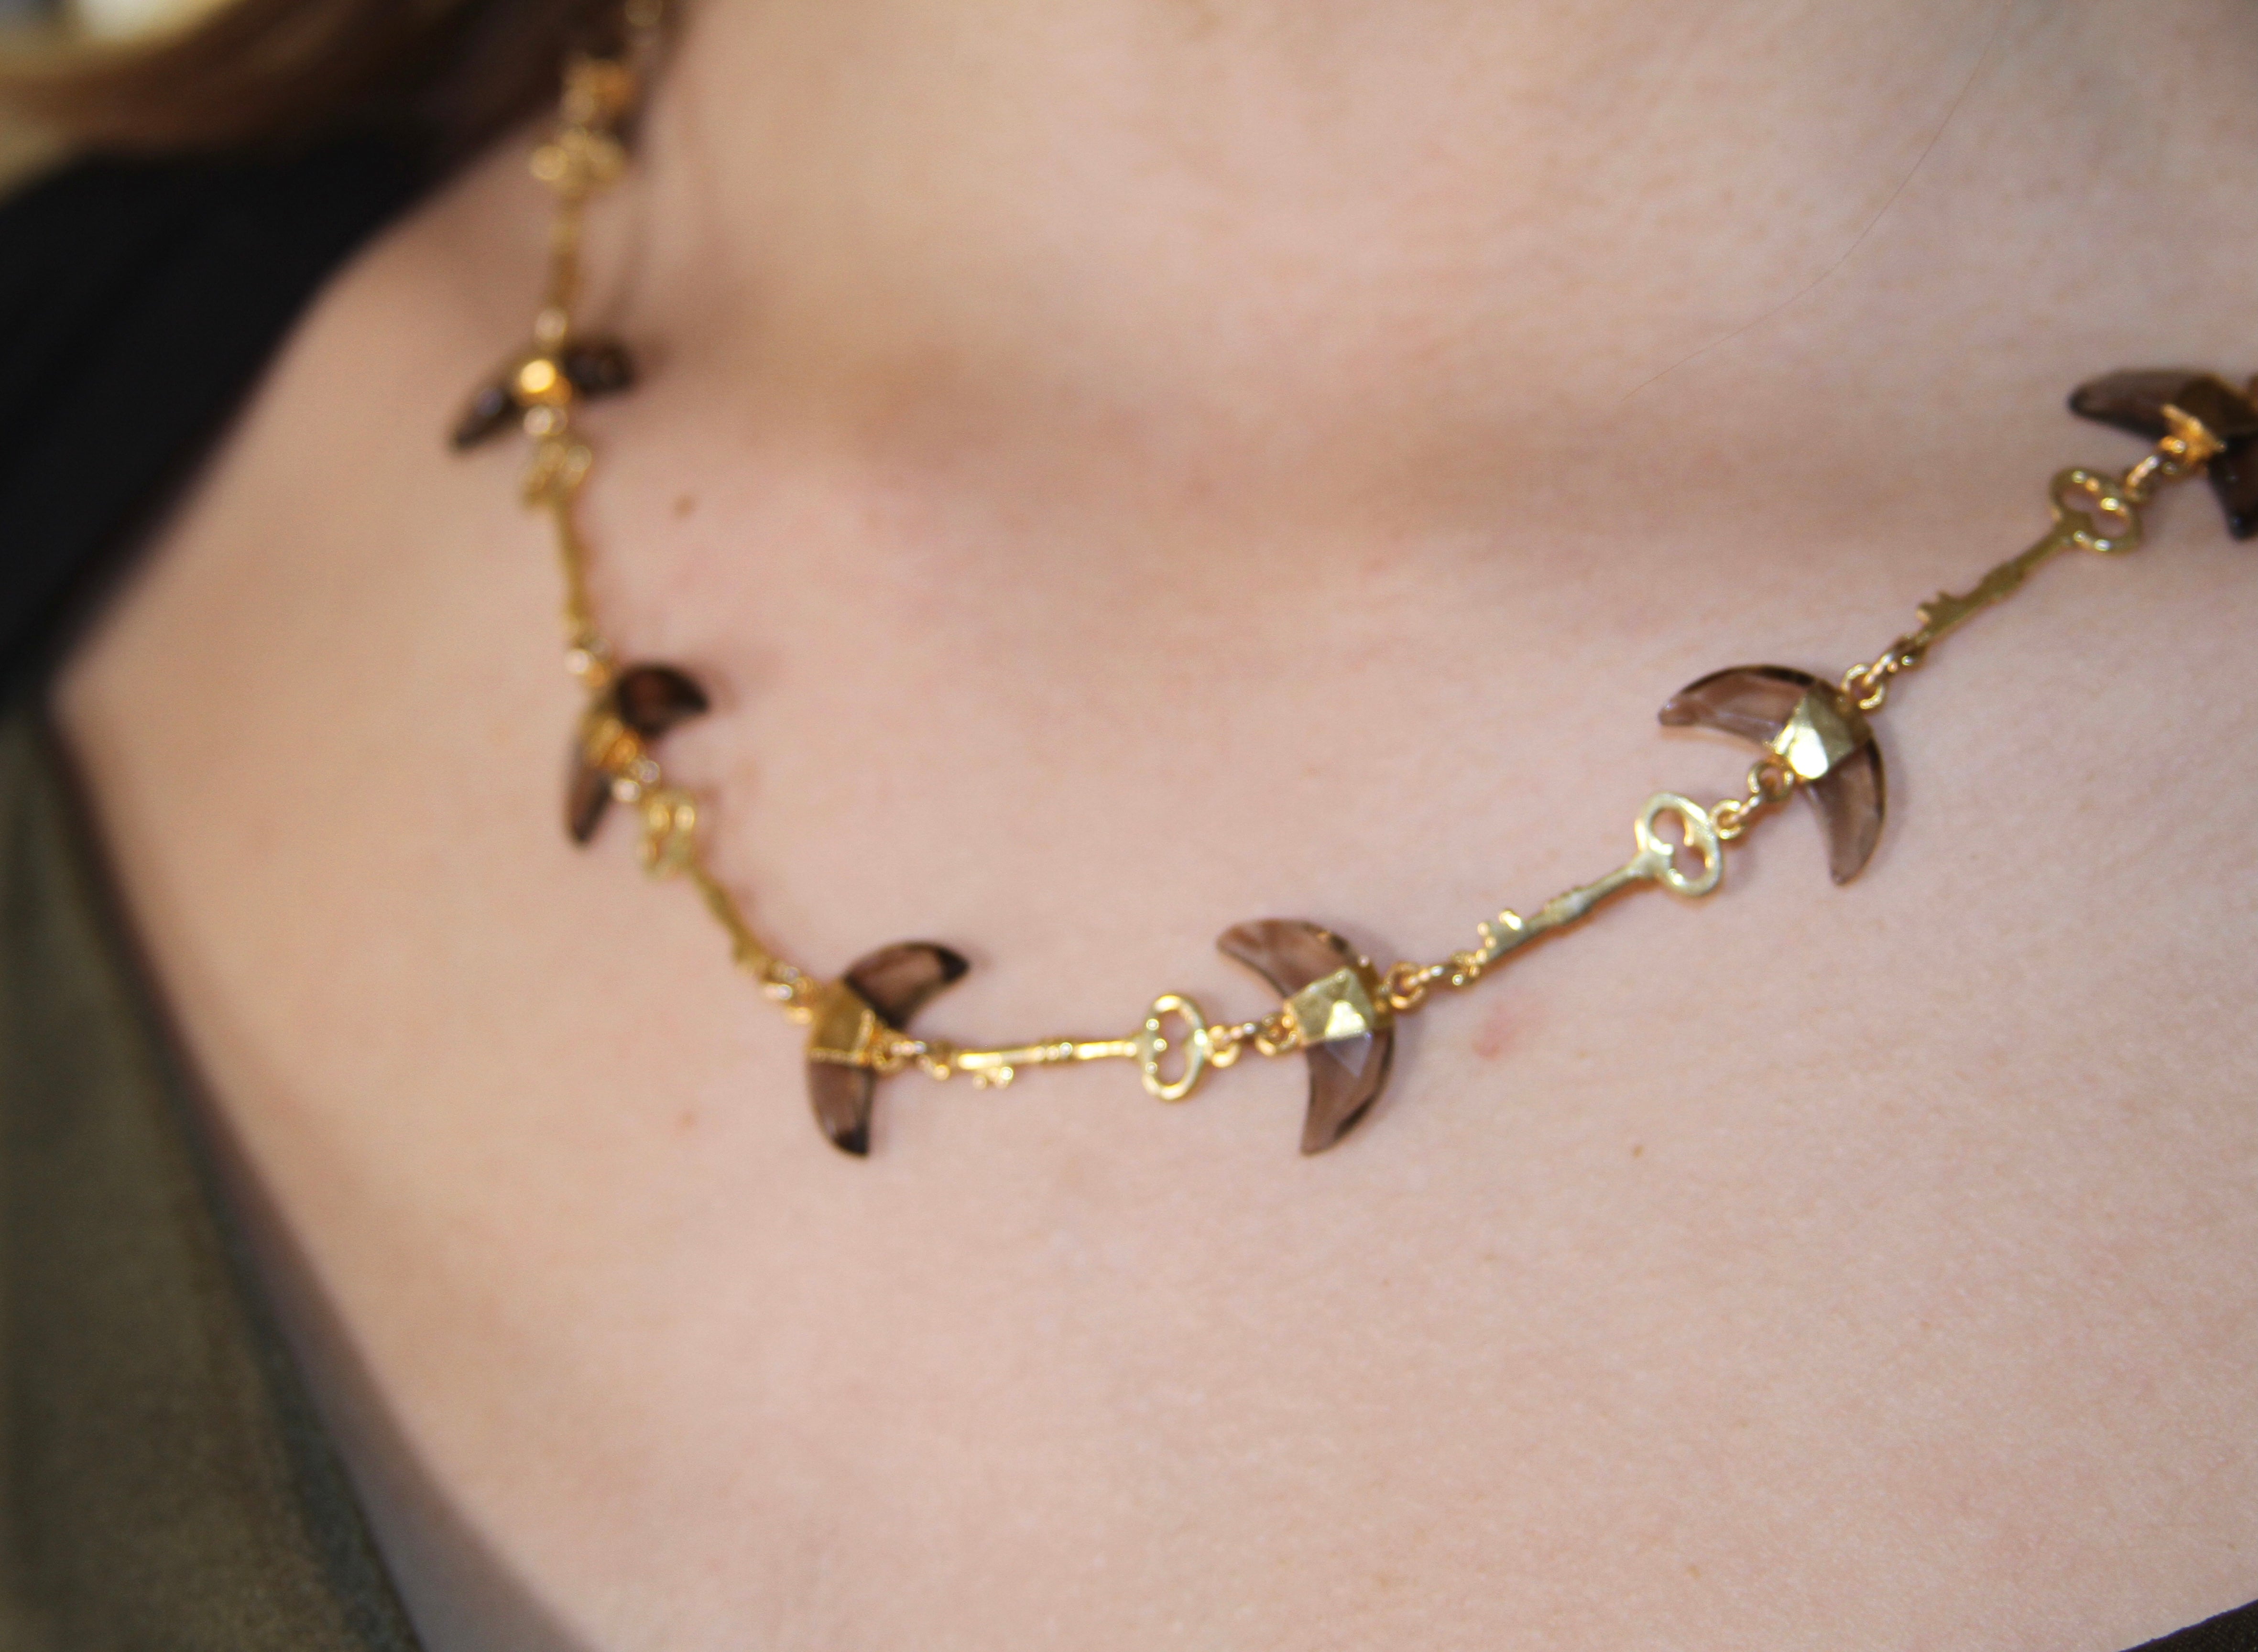 Necklace of Artemis Key